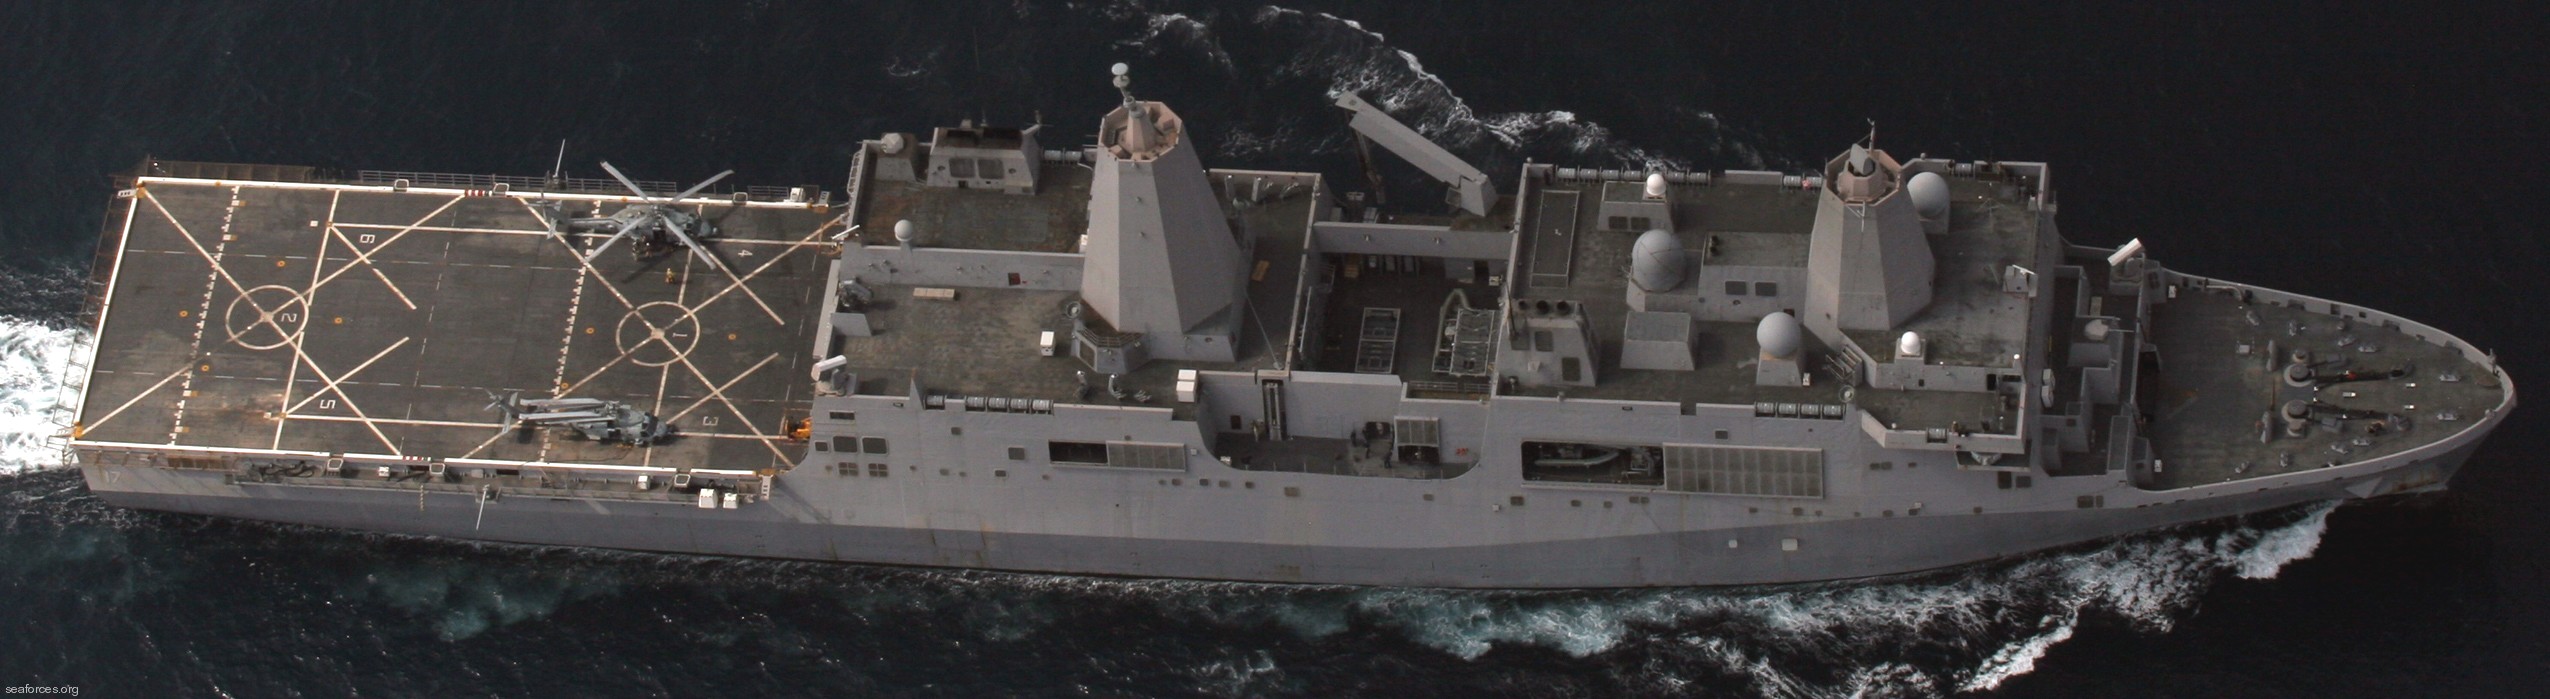 san antonio class amphibious transport dock ship landing platform navy 36x